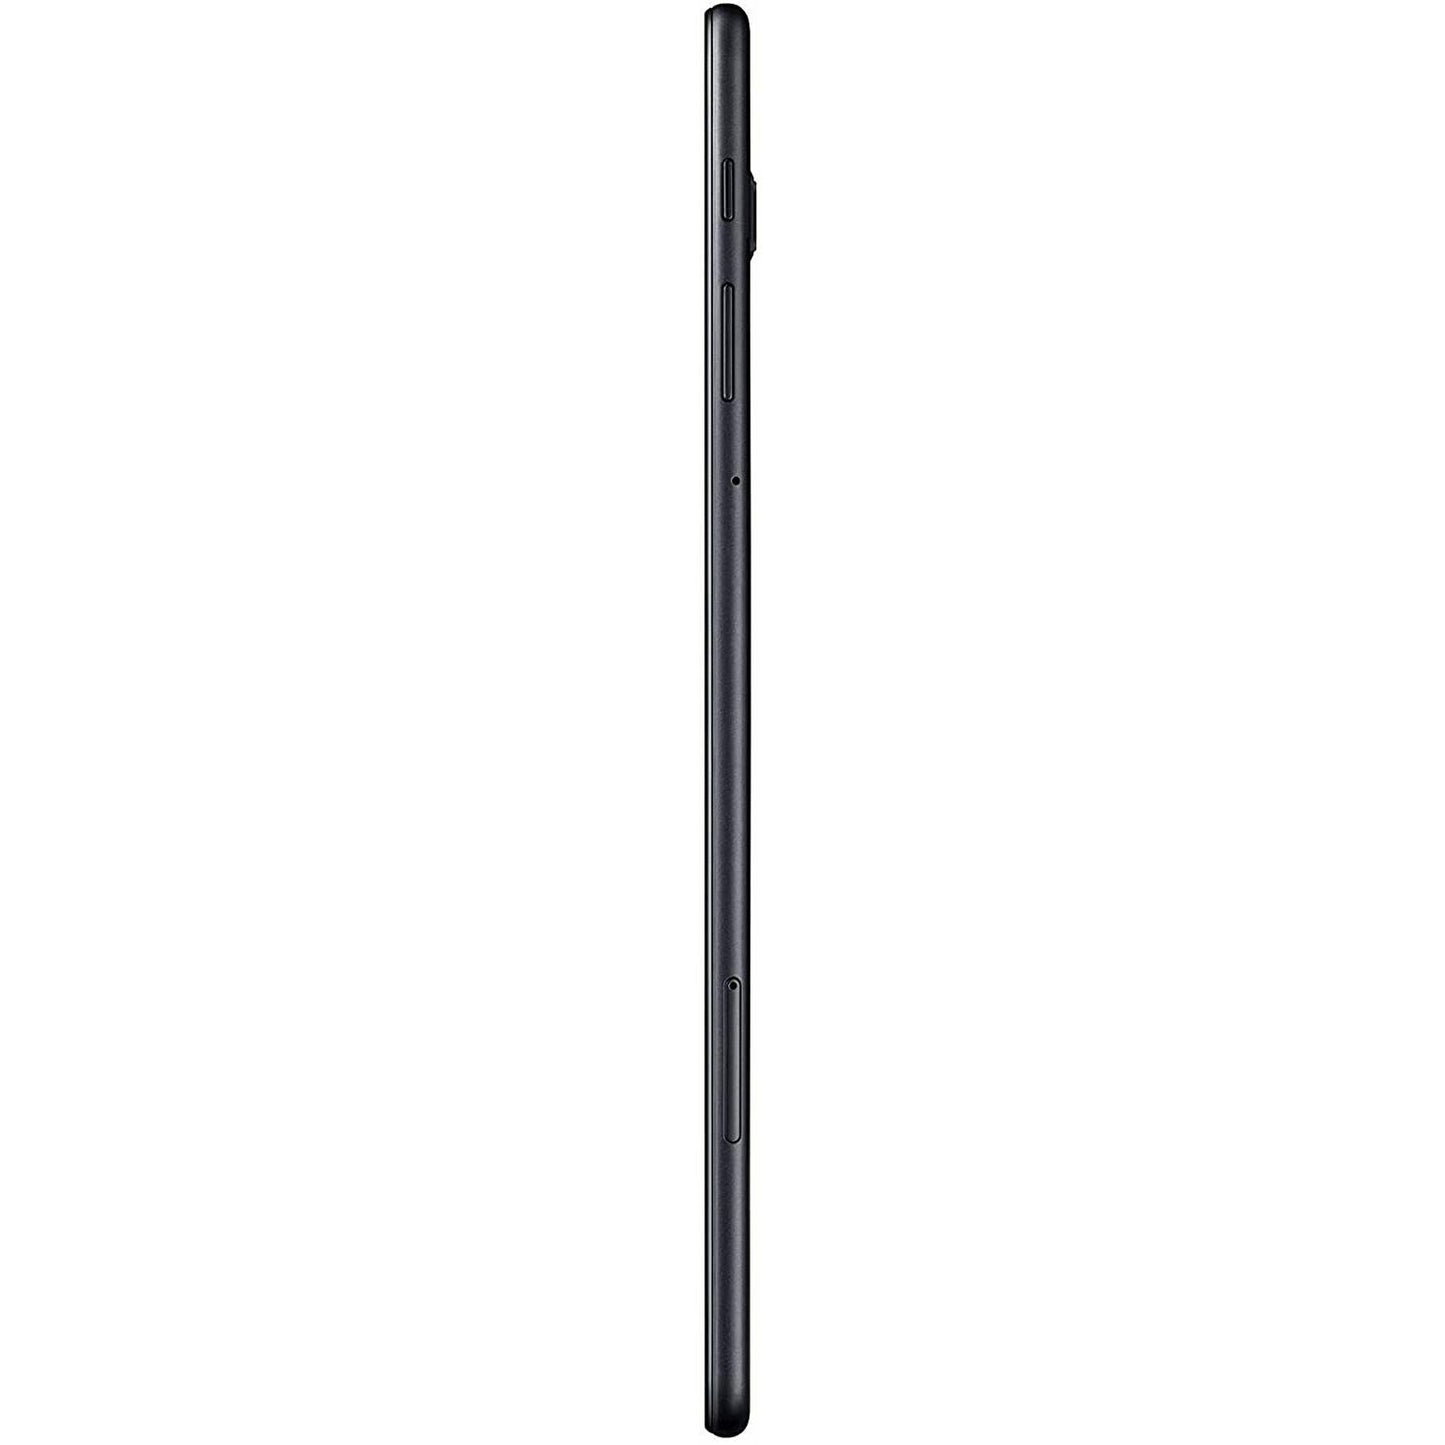 Samsung Galaxy Tab A 10.5" 32GB Wi-Fi Android Tablet Black SM-T590